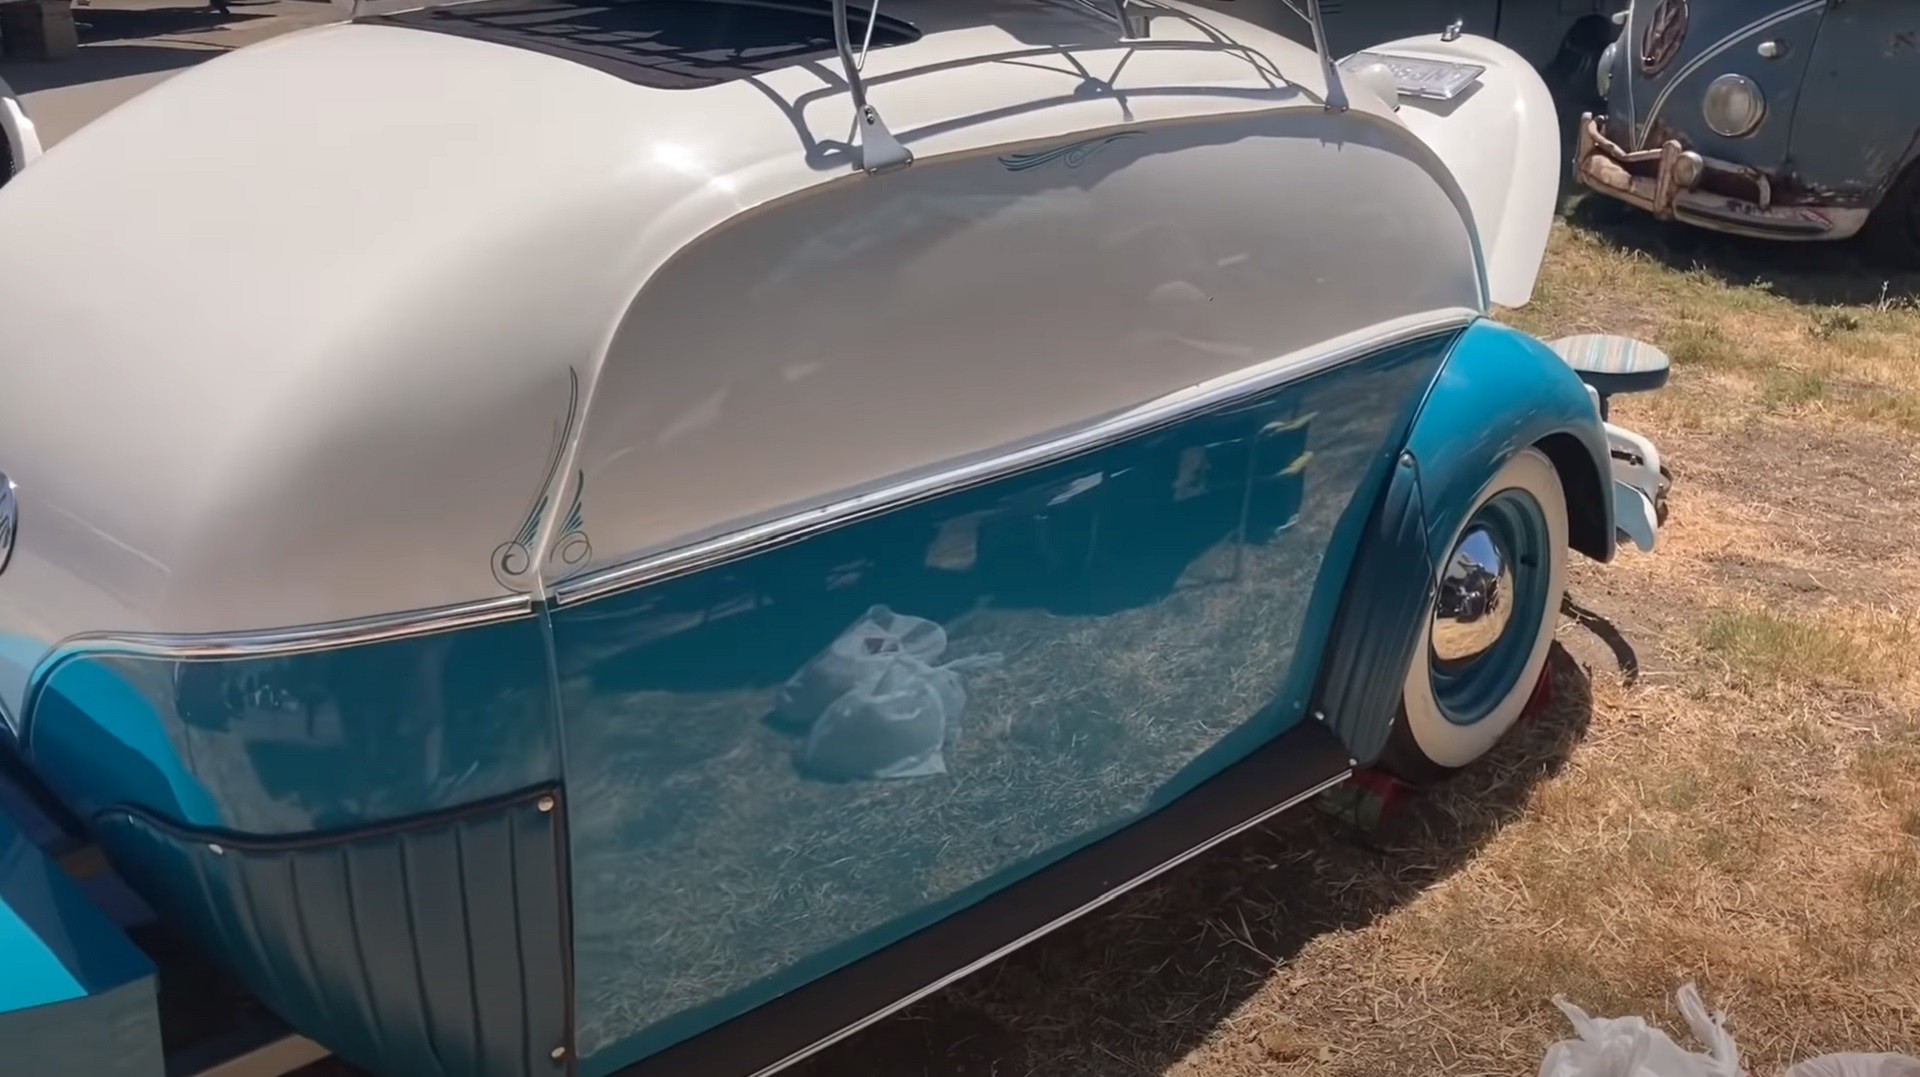 Classic VW Beetle Converted To Teardrop Camper Trailer Is Too Cute